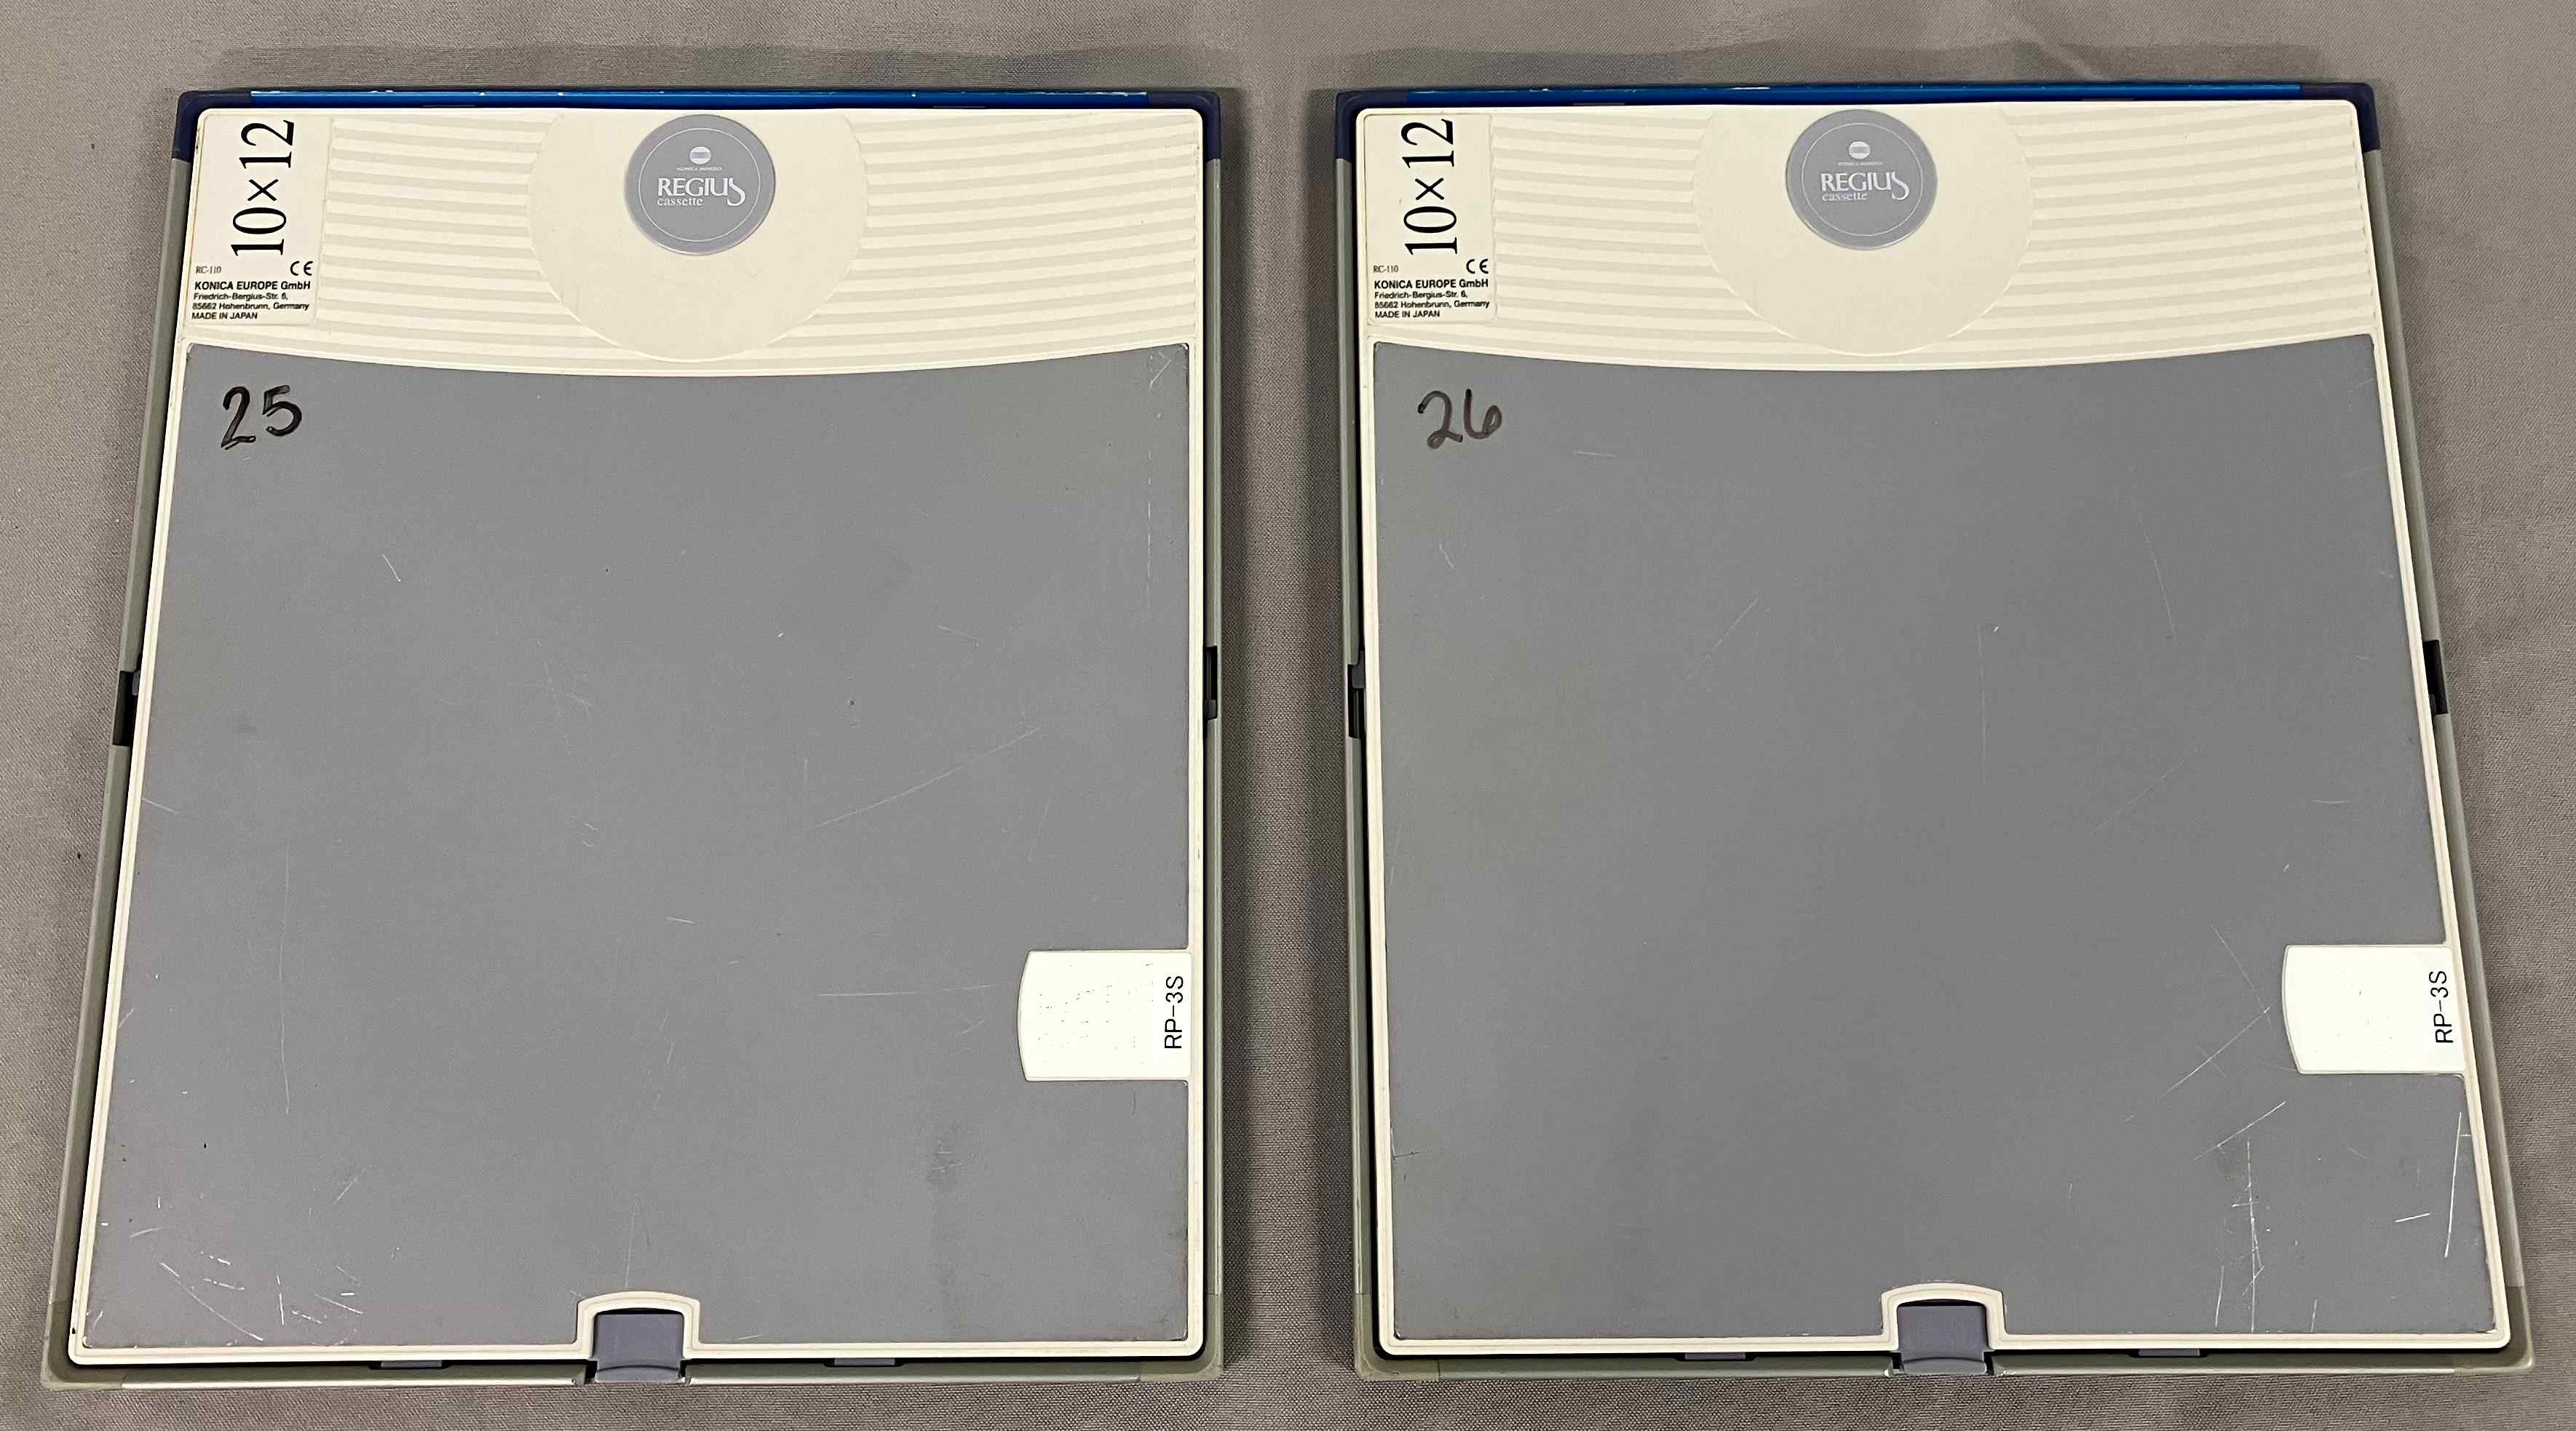 Konica Minolta Regius Cassette 10x12 in, RC-110/RP-3S - QTY 2